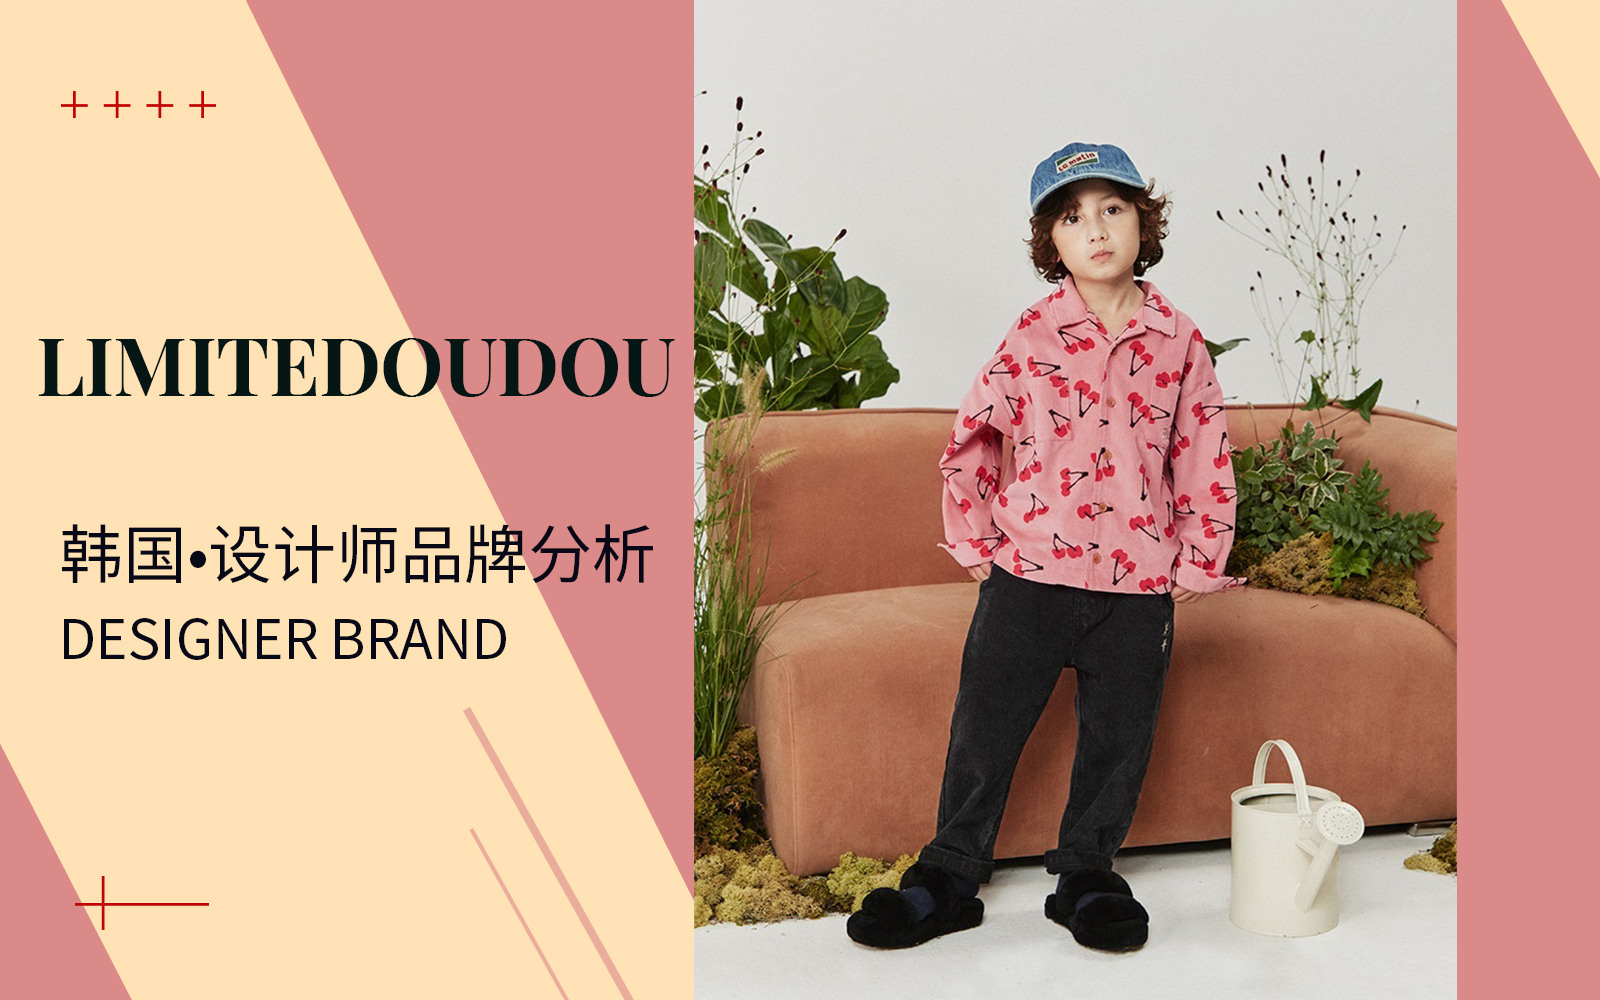 A Sunny Autumn/Winter -- The Analysis of Limitedoudou The Kidswear Designer Brand